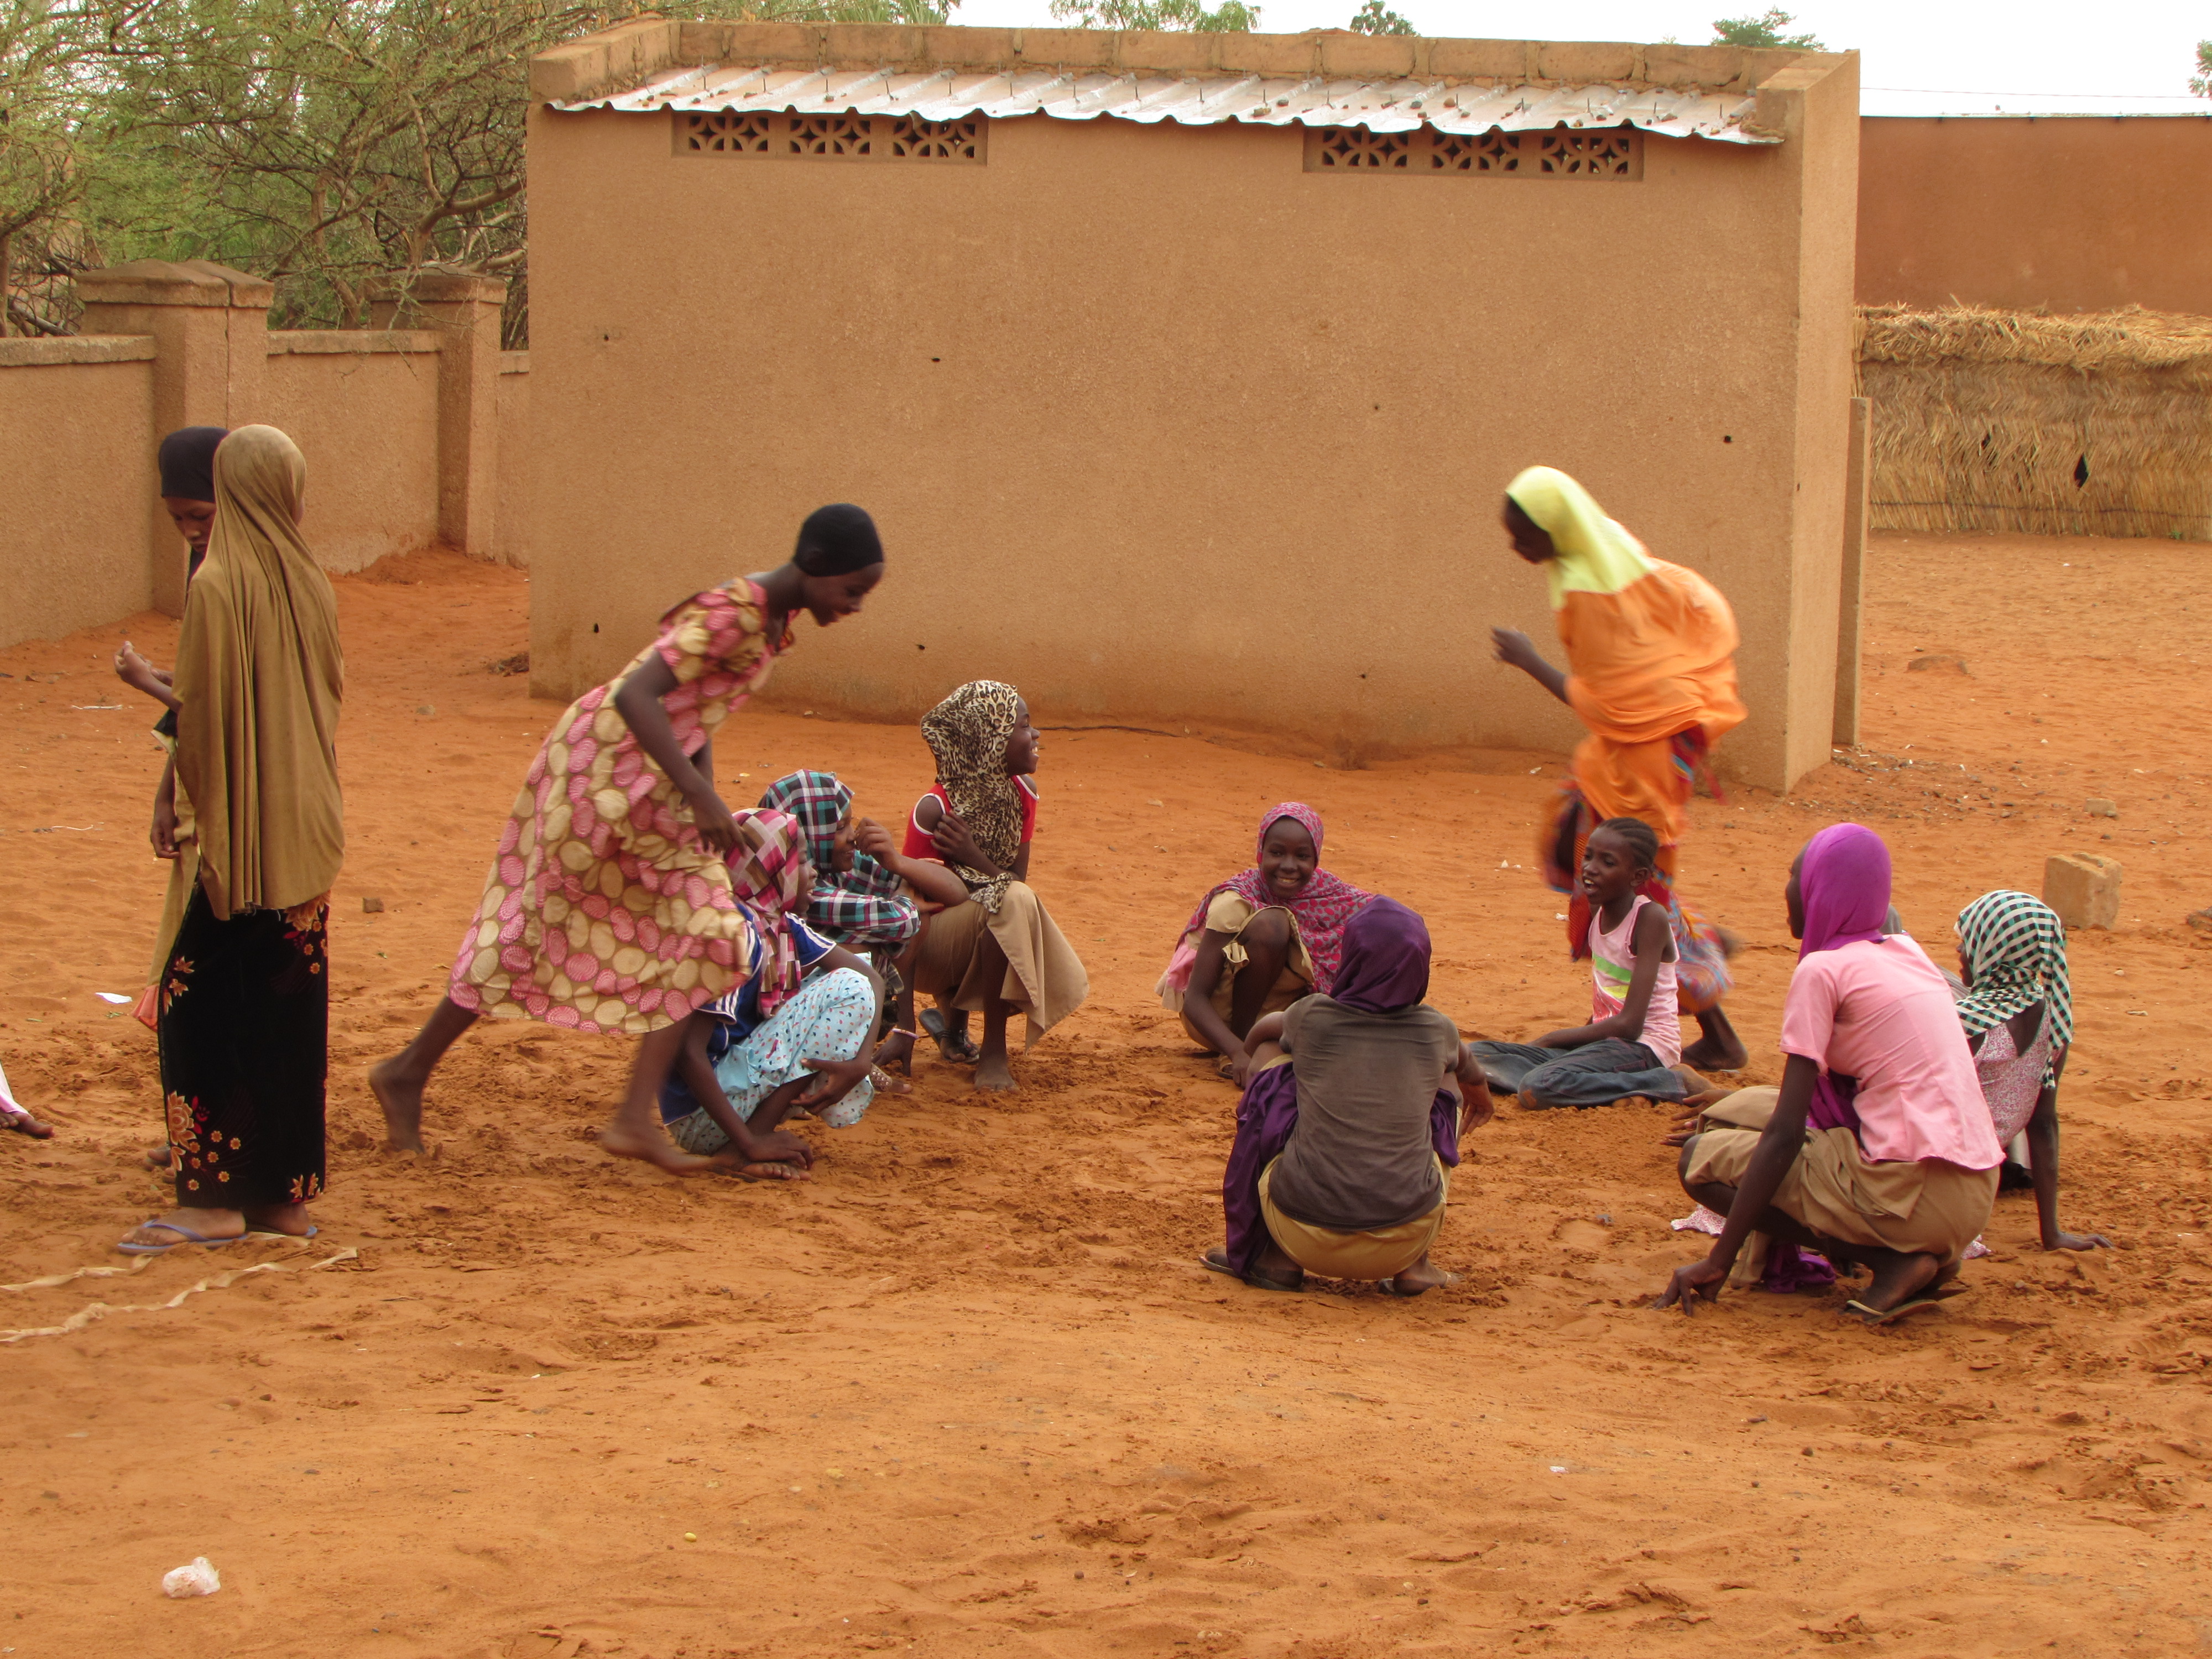 Fieldwork photo from Niger (Halimatou Hima)